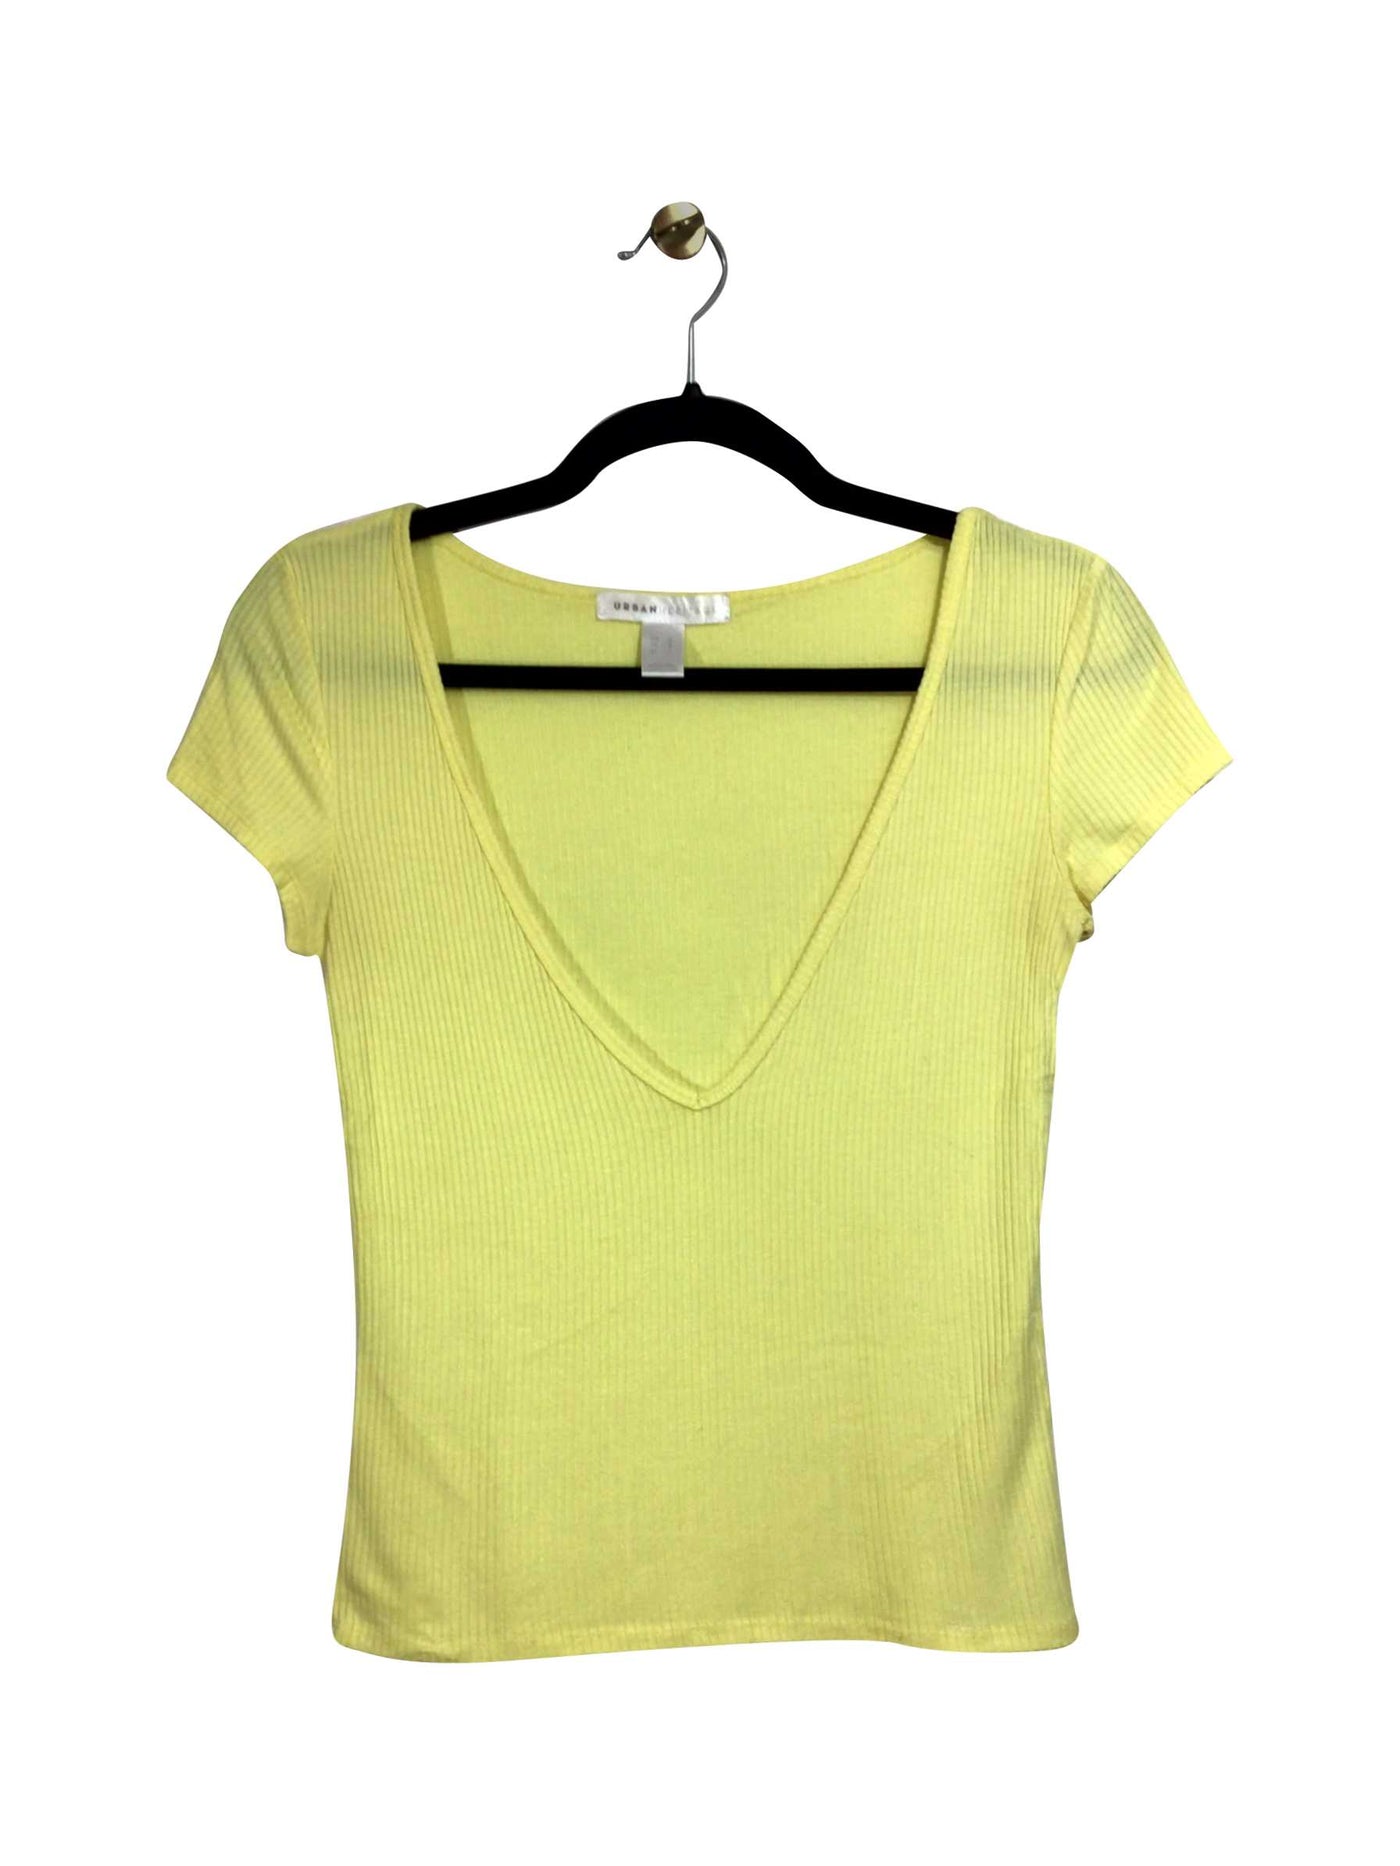 URBAN HERITAGE Regular fit T-shirt in Yellow - Size S | 9.74 $ KOOP